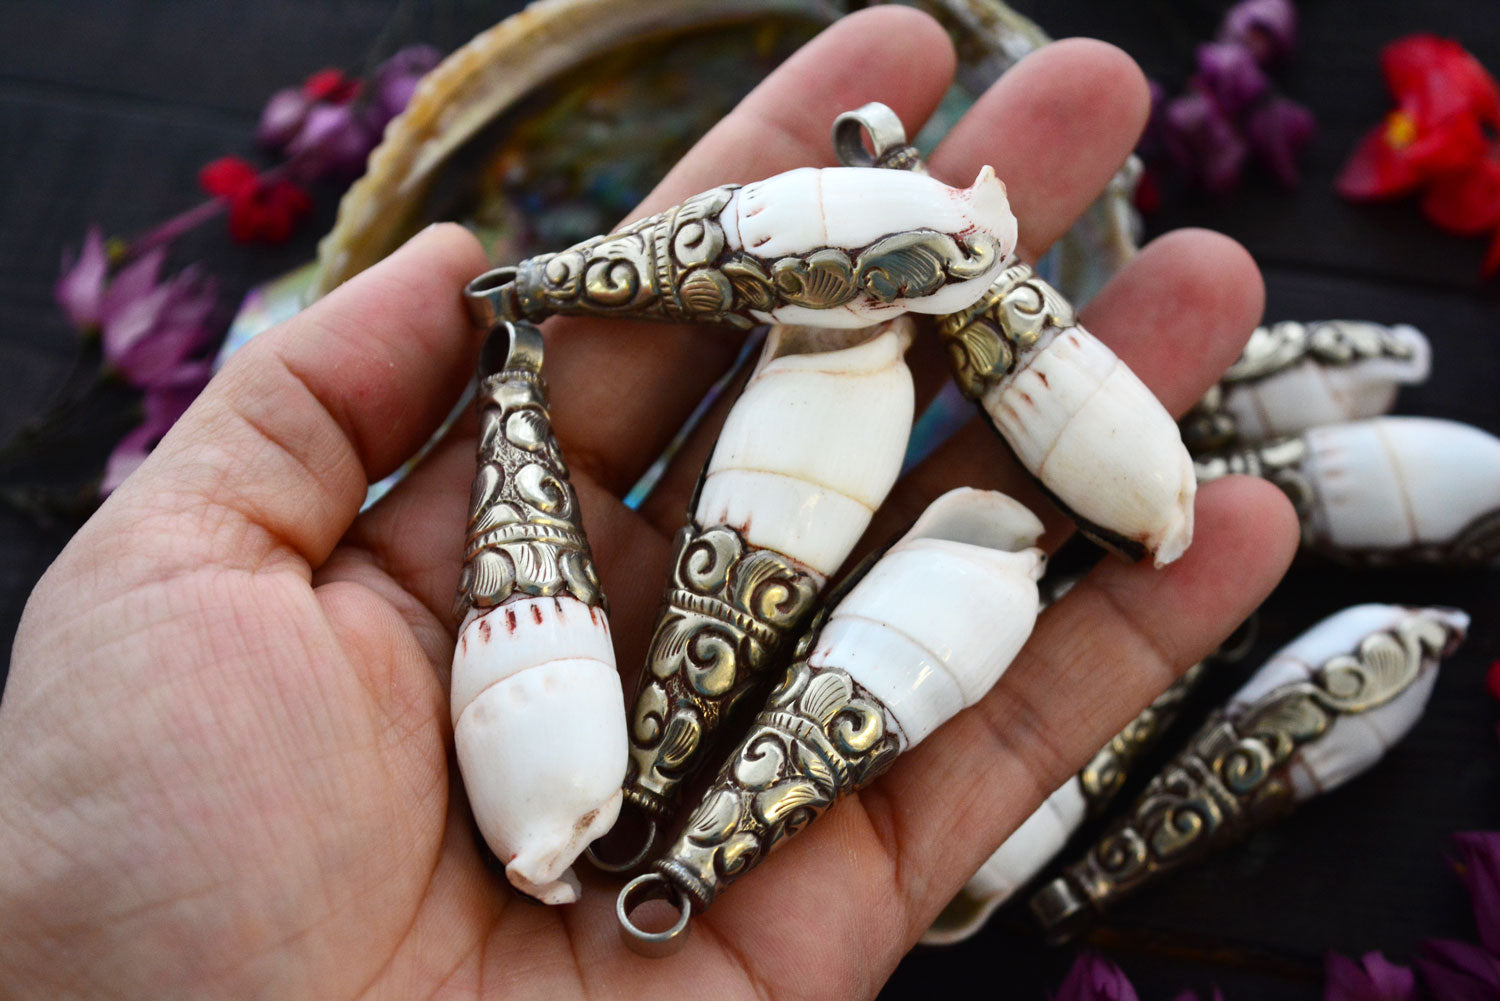 Drops in a Shell, 17x60mm, White Brass Seashell Nepali Pendant, One Pe –  Nature Beads